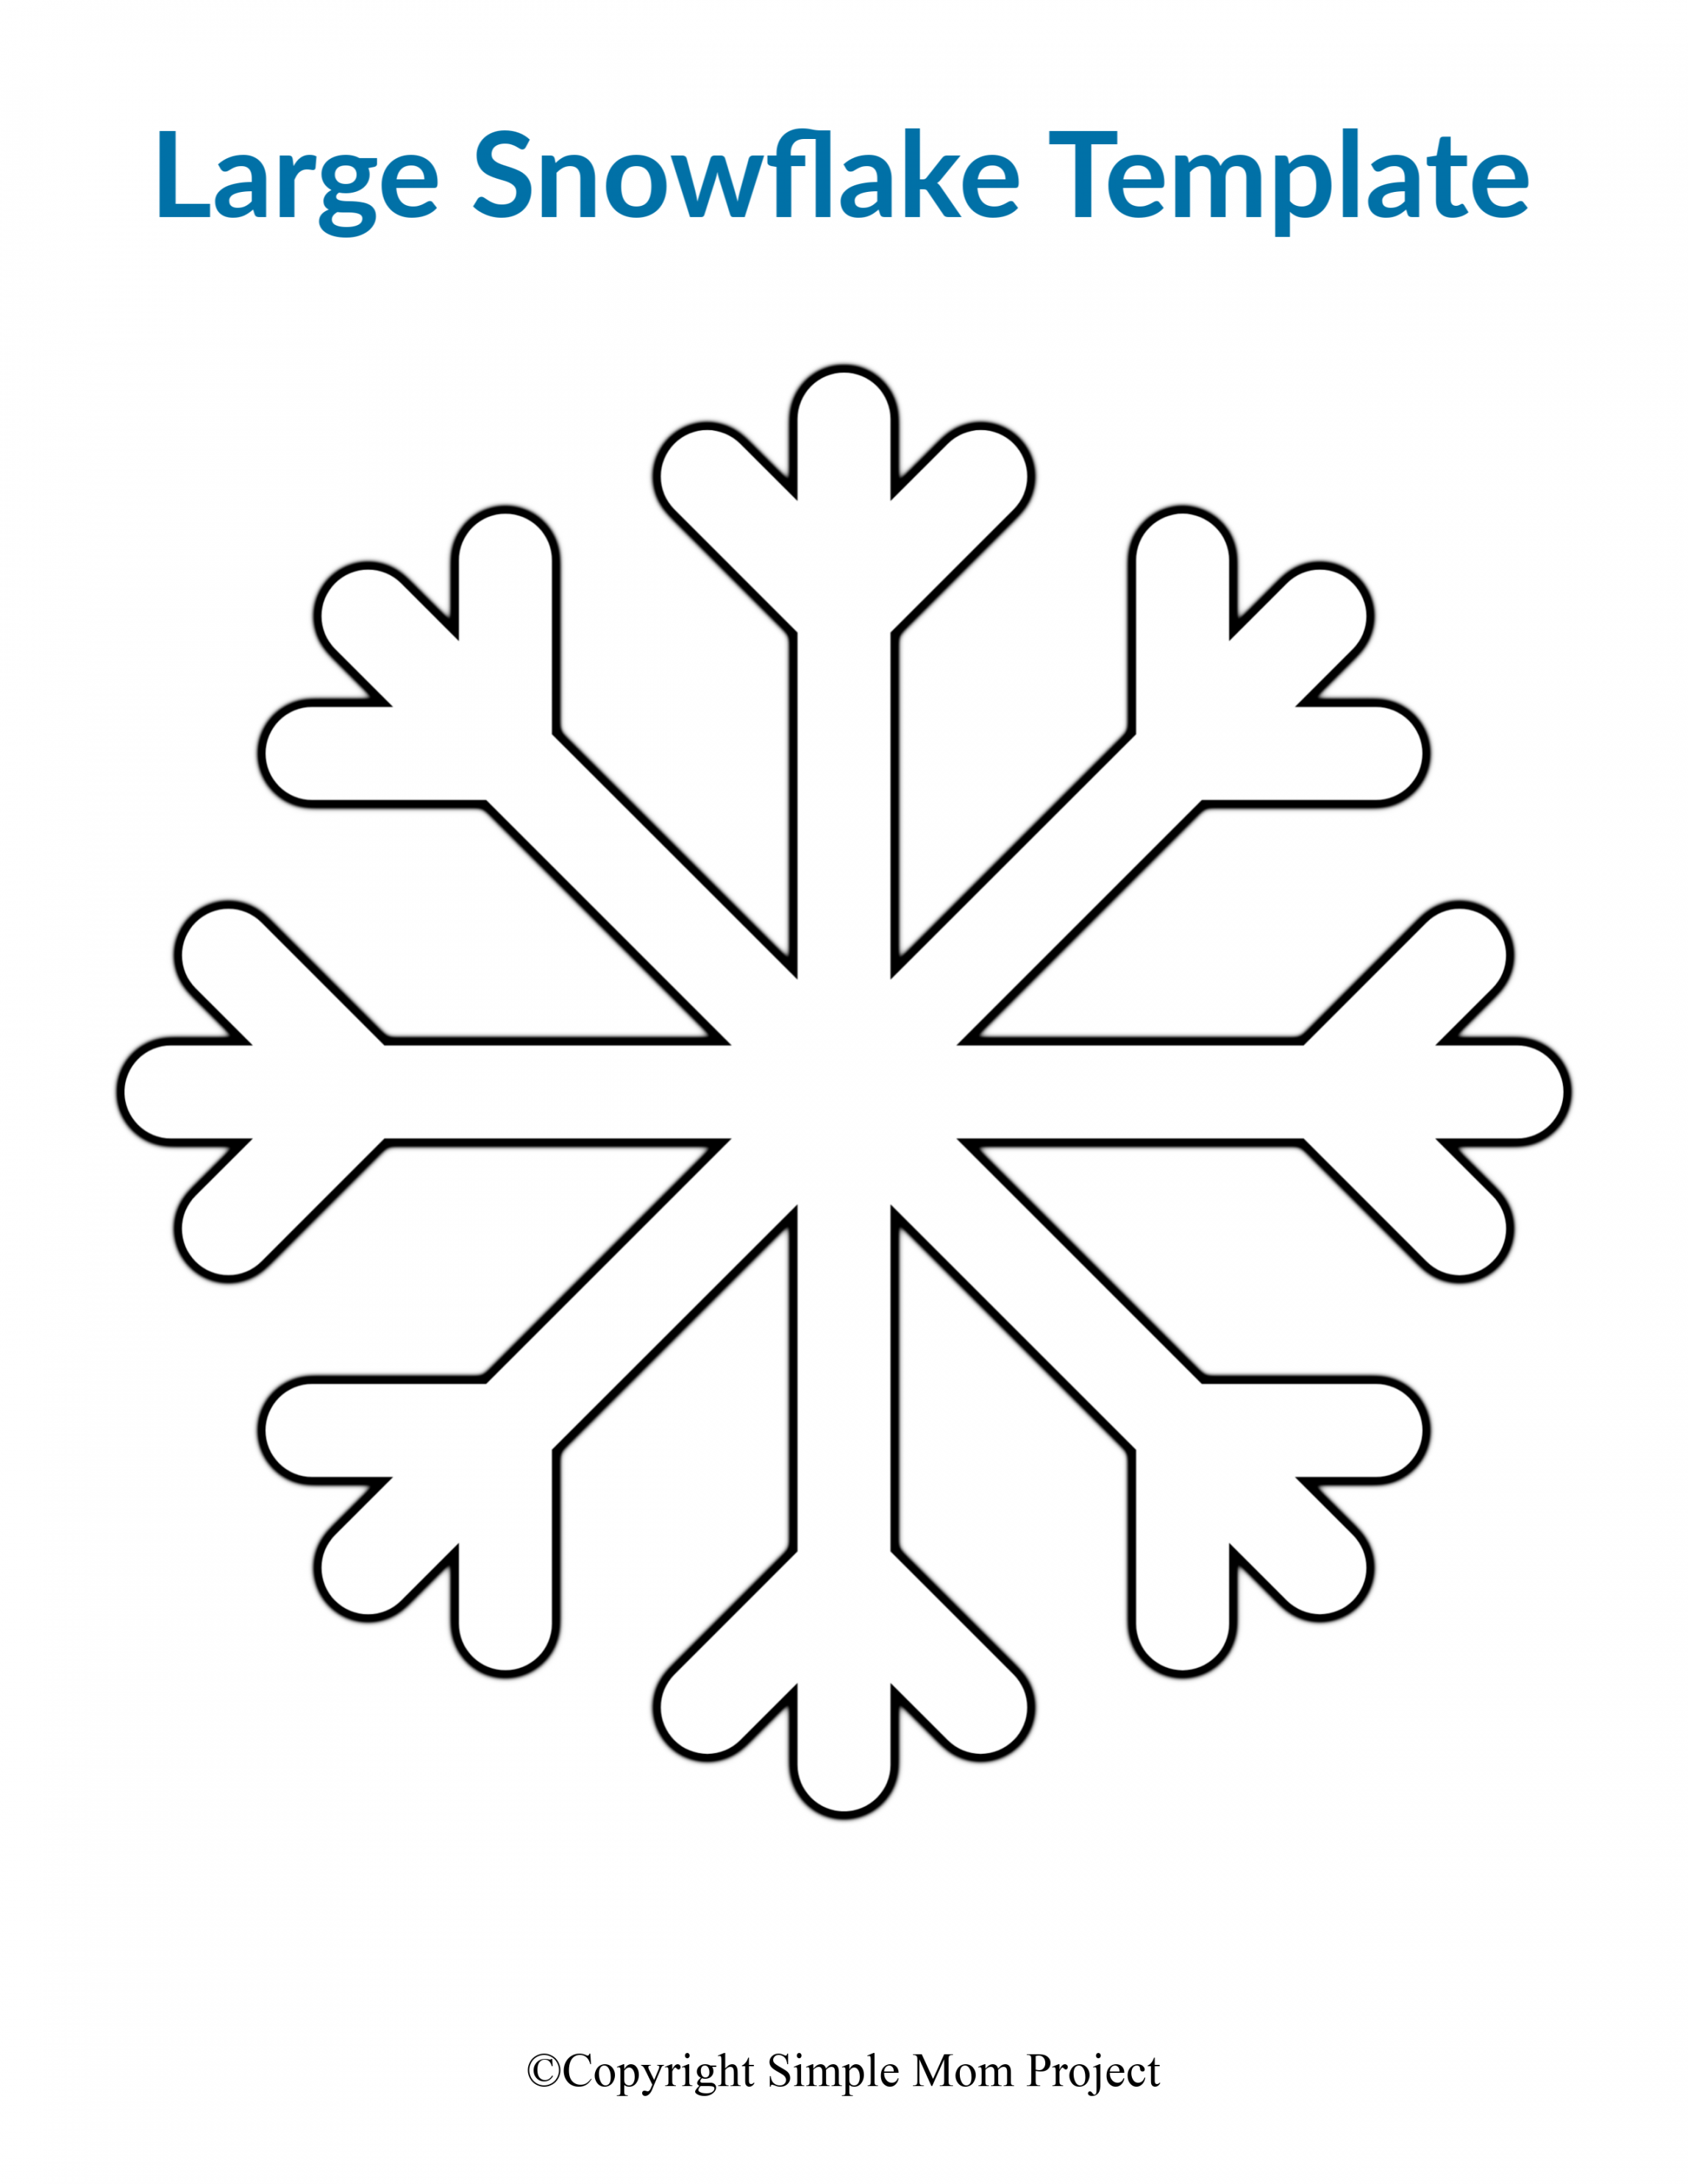 Free Printable Large Snowflake Templates - Simple Mom Project - FREE Printables - Printable Snow Flakes